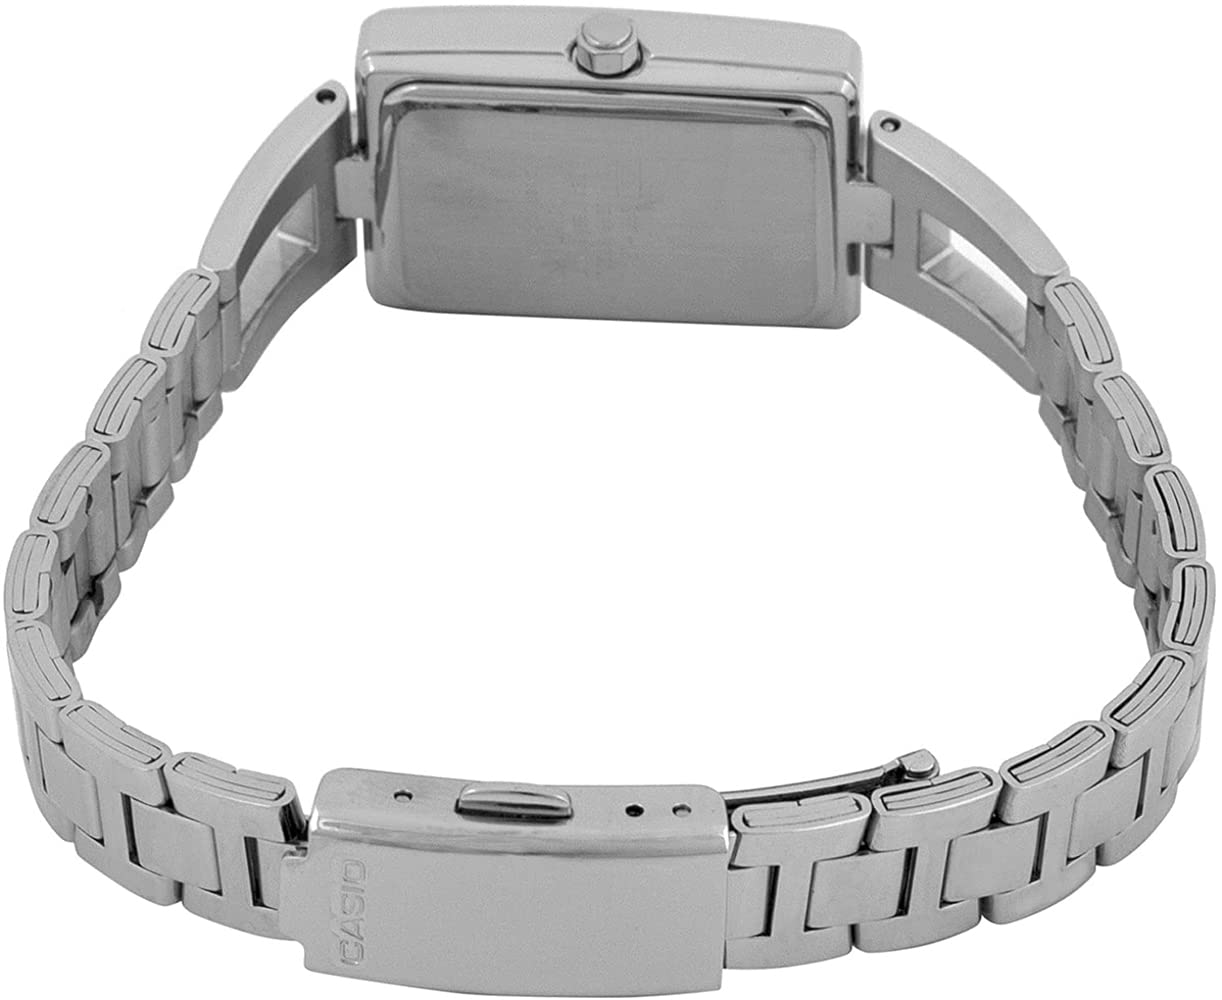 Casio Women's Core LTP1341D-5A Silver Stainless-Steel Quartz Watch with Orange Dial